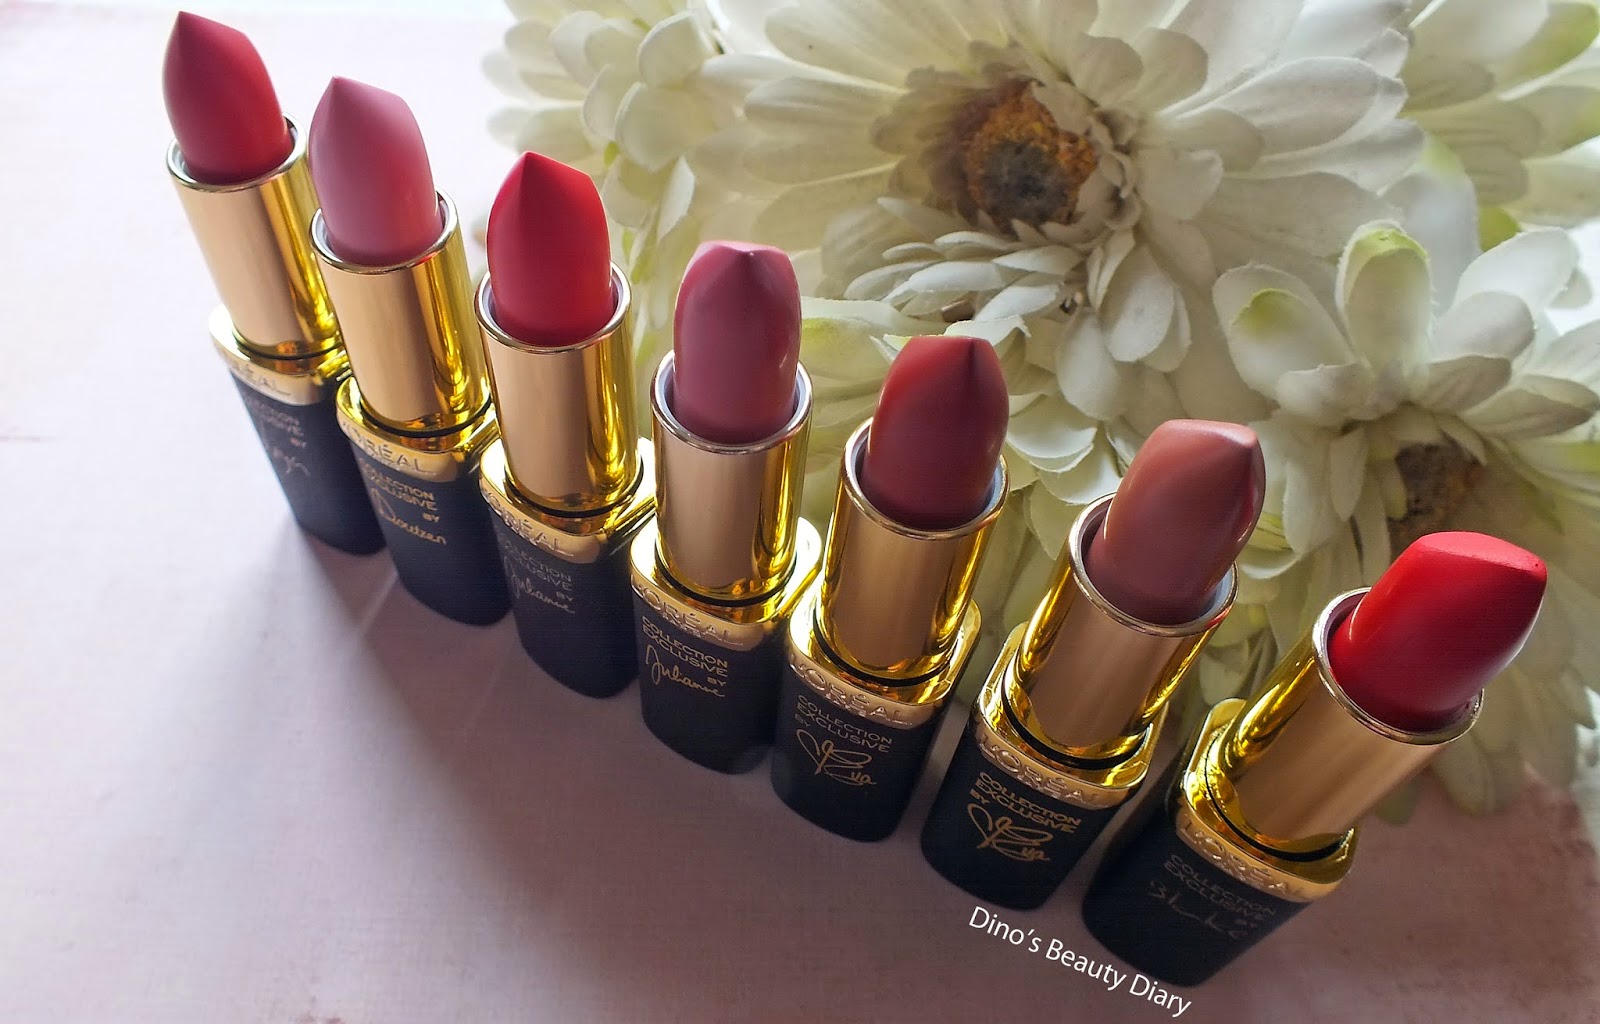 Loreal collection privee colour riche lipsticks  evas